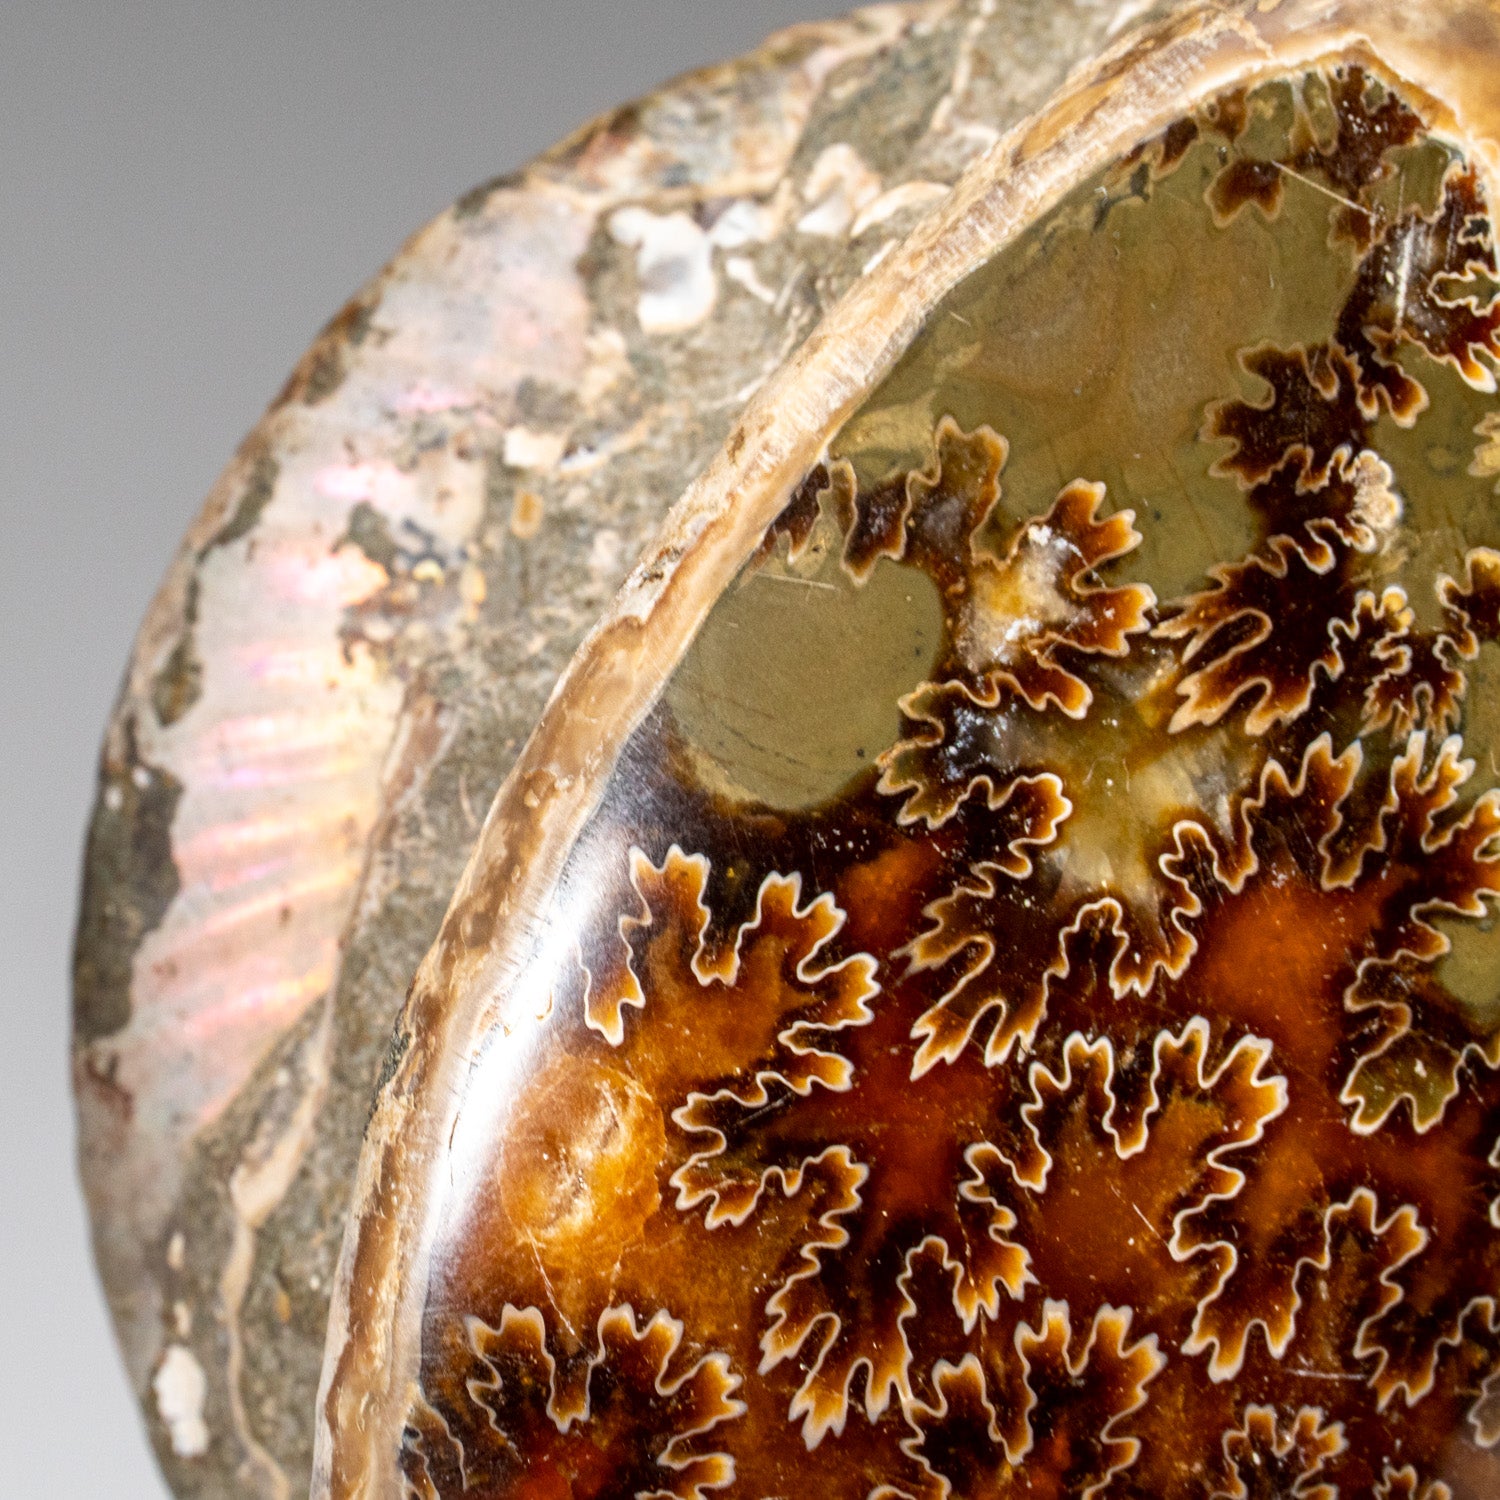 Genuine Calcified Ammonite on Matrix Opalized (4 lbs)